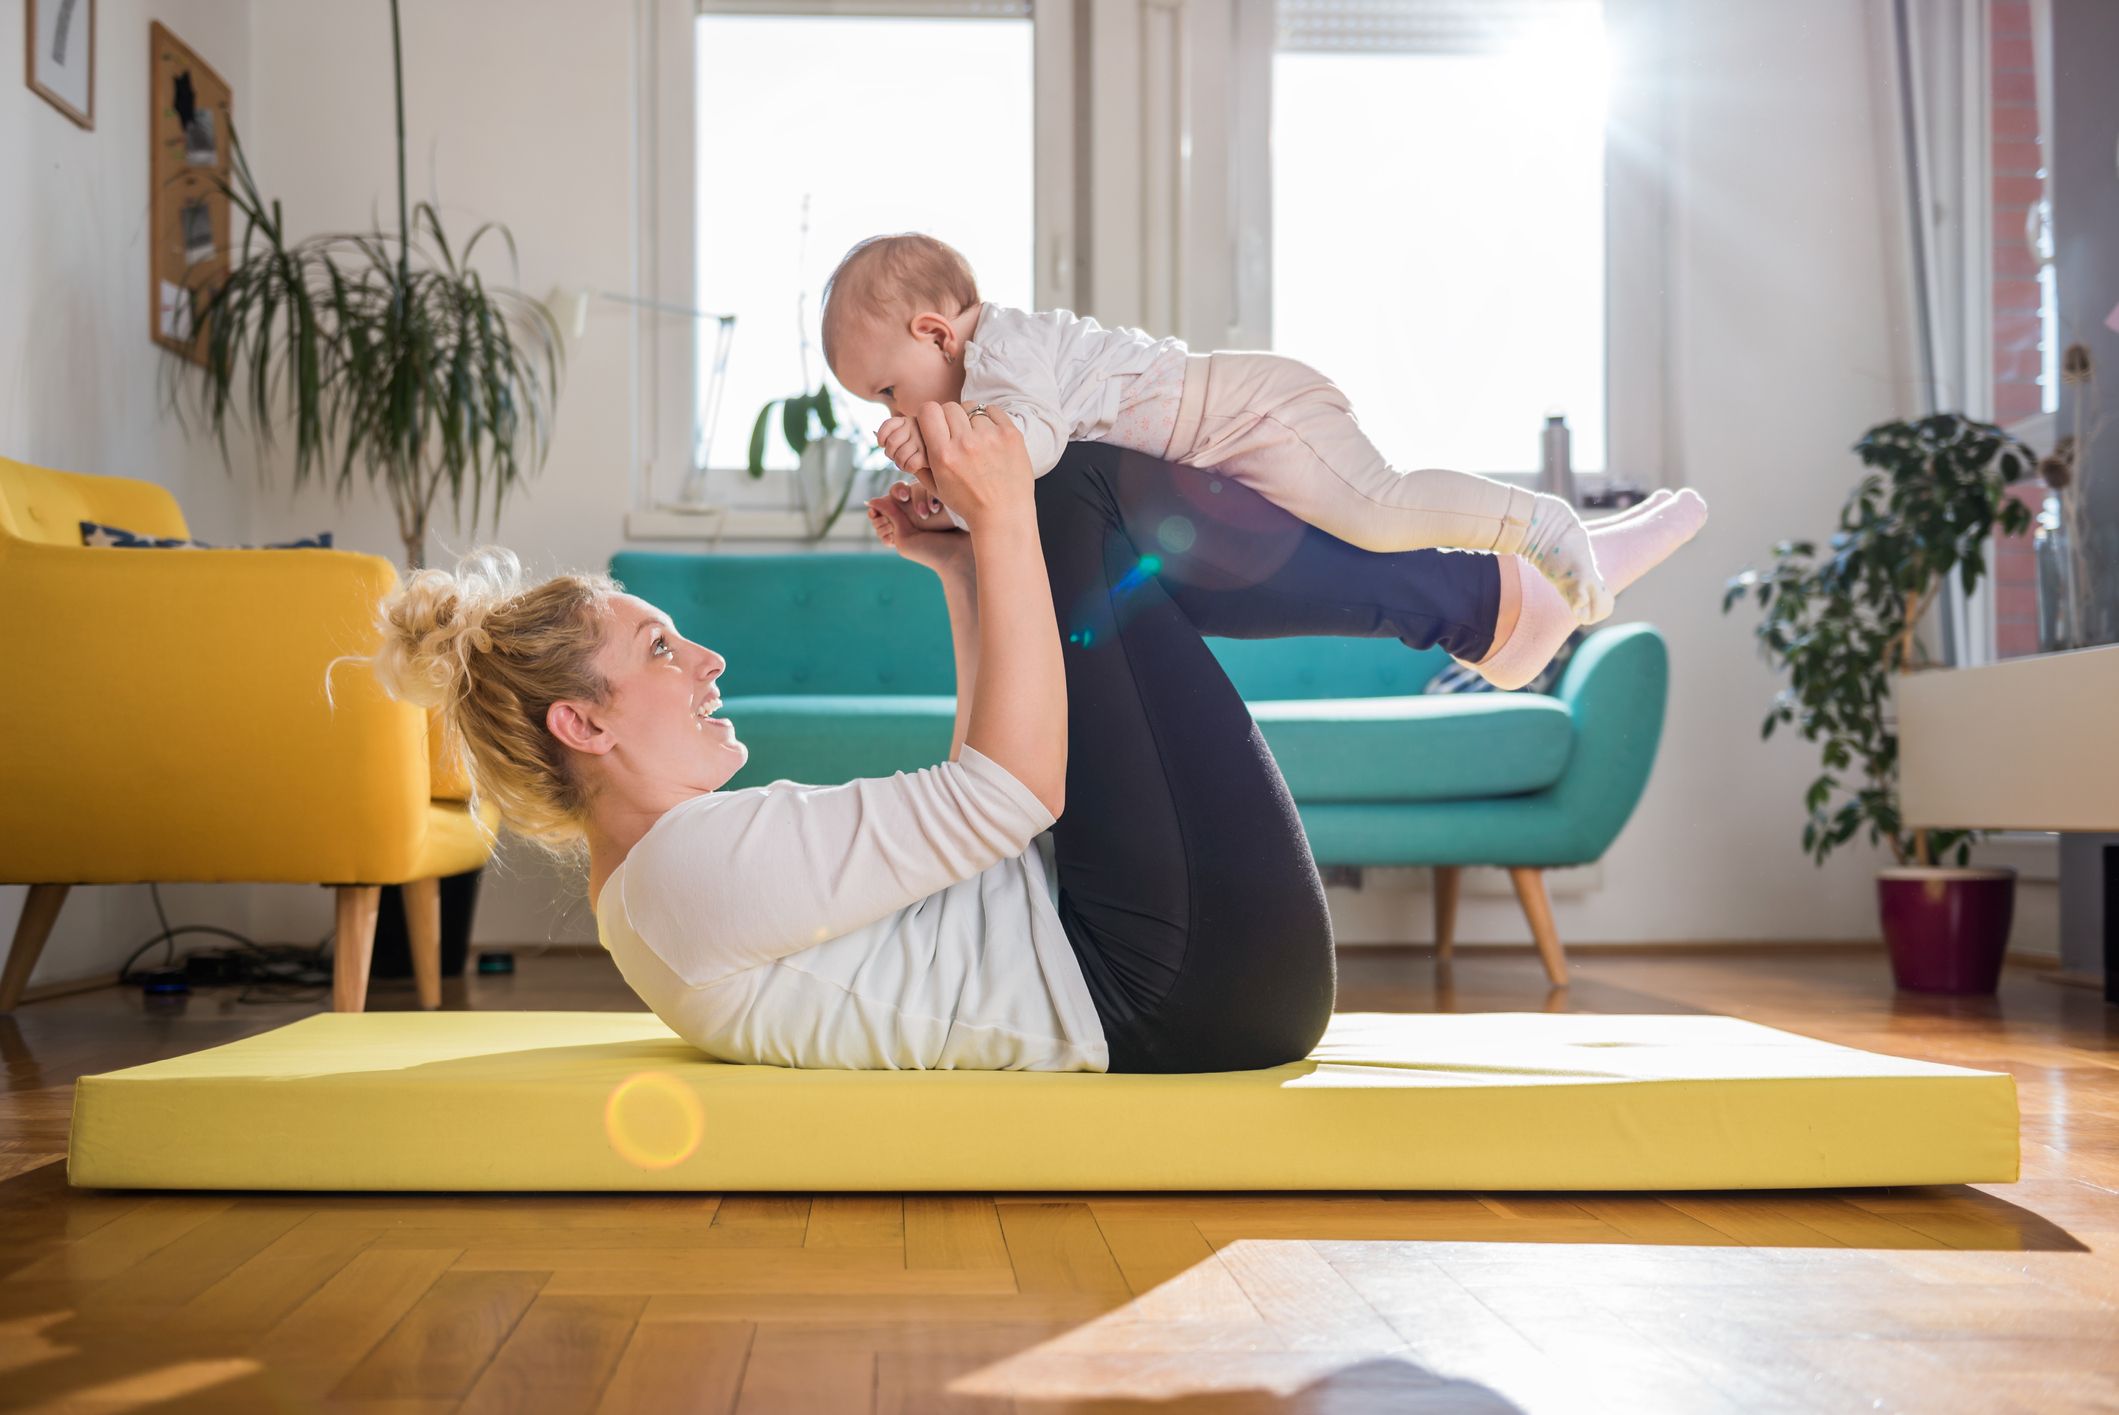 Strength, Mobility & Resistance Pregnancy Postpartum workout - BodyFabulous  Pregnancy Women's Fitness